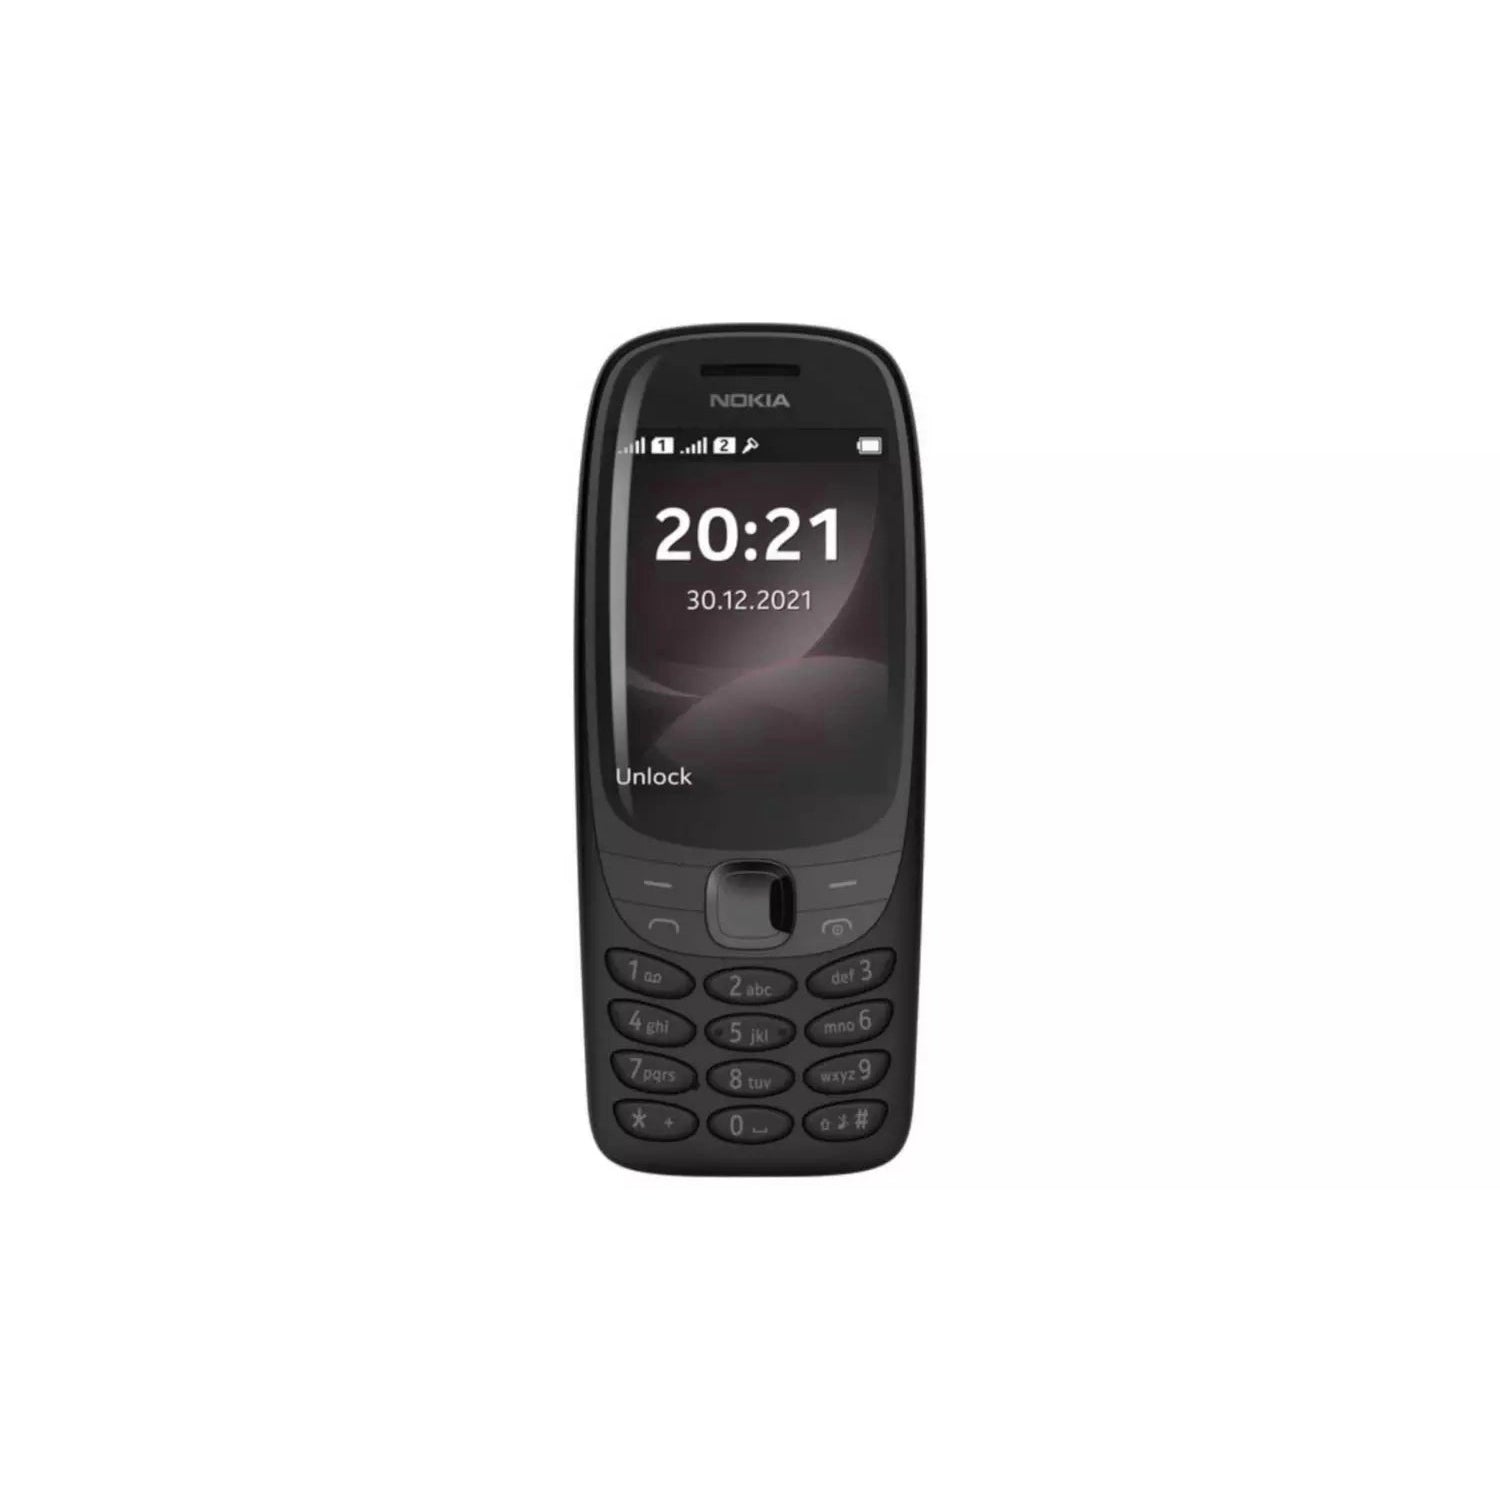 Nokia 6310 4G Sim Free Mobile Phone - Black - Refurbished Excellent